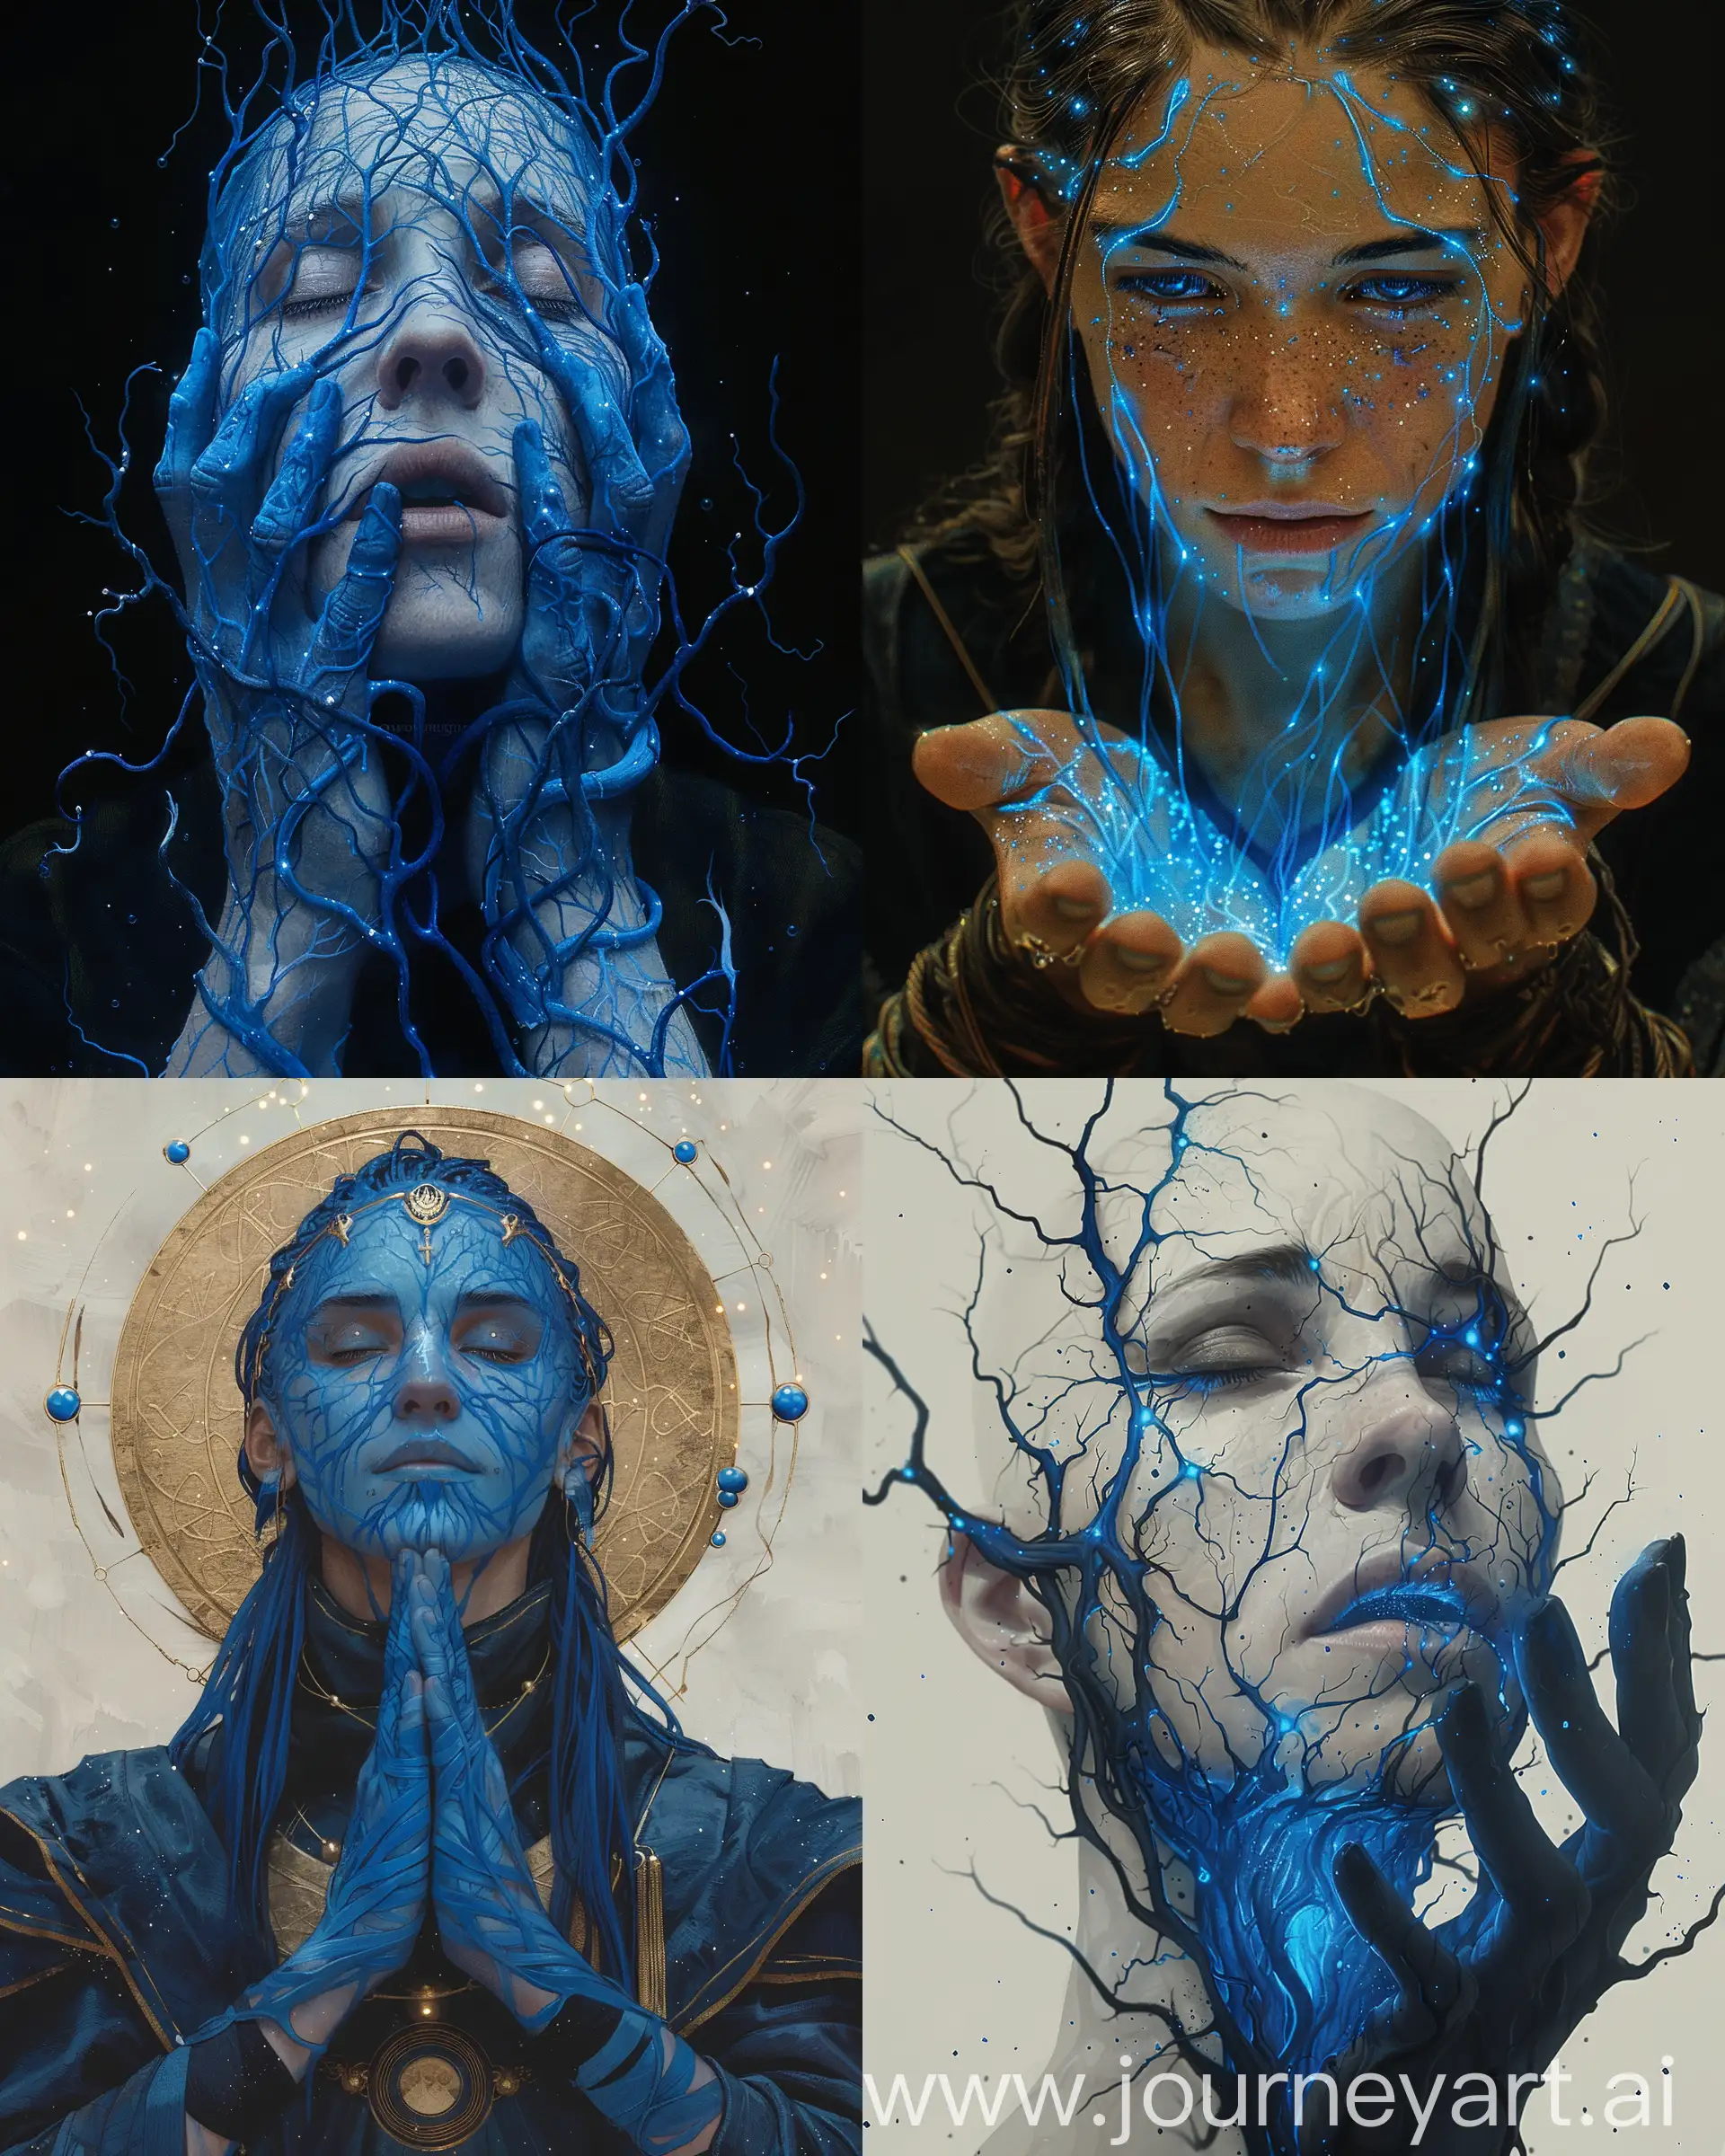 Ethereal-Goddess-with-Blue-Veins-Enchanting-Artwork-Captures-Divine-Beauty